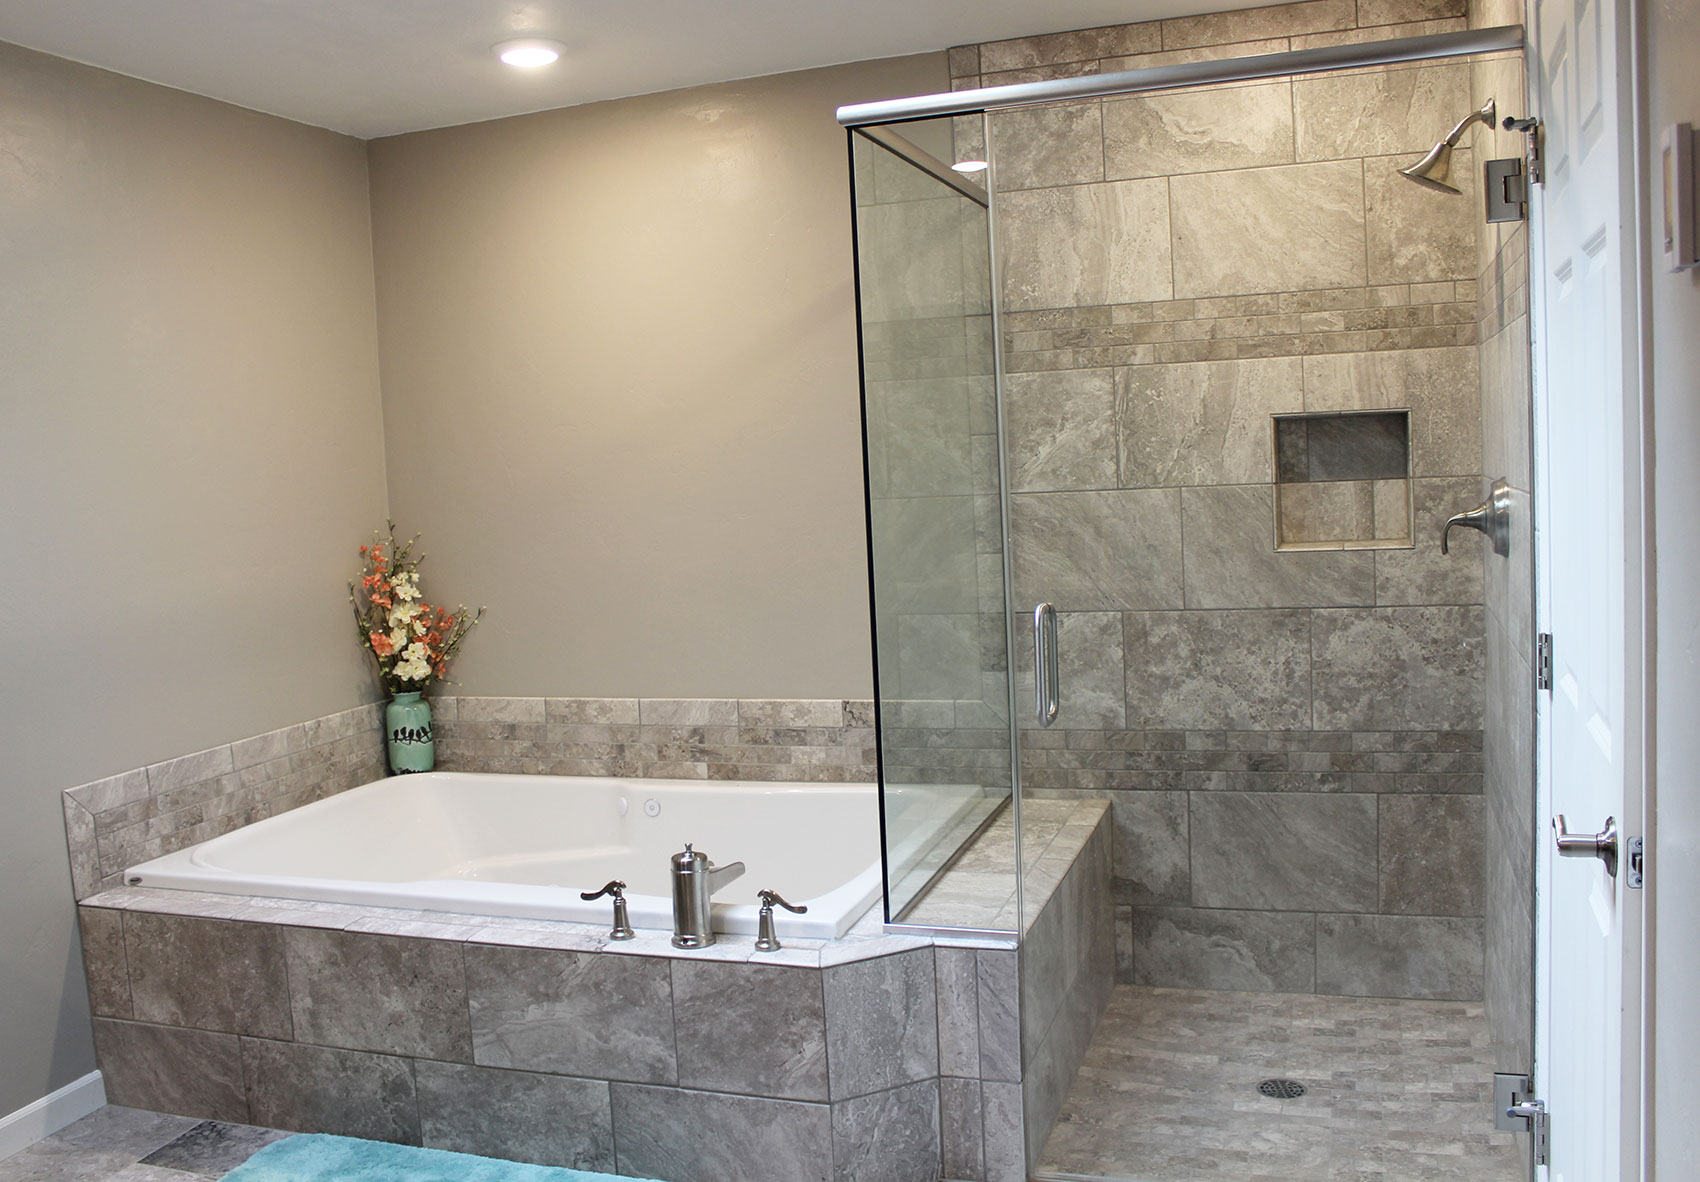 Bathroom remodel - Master Bathroom Remodel - Custom Tile - PortSide Builders1700 x 1182